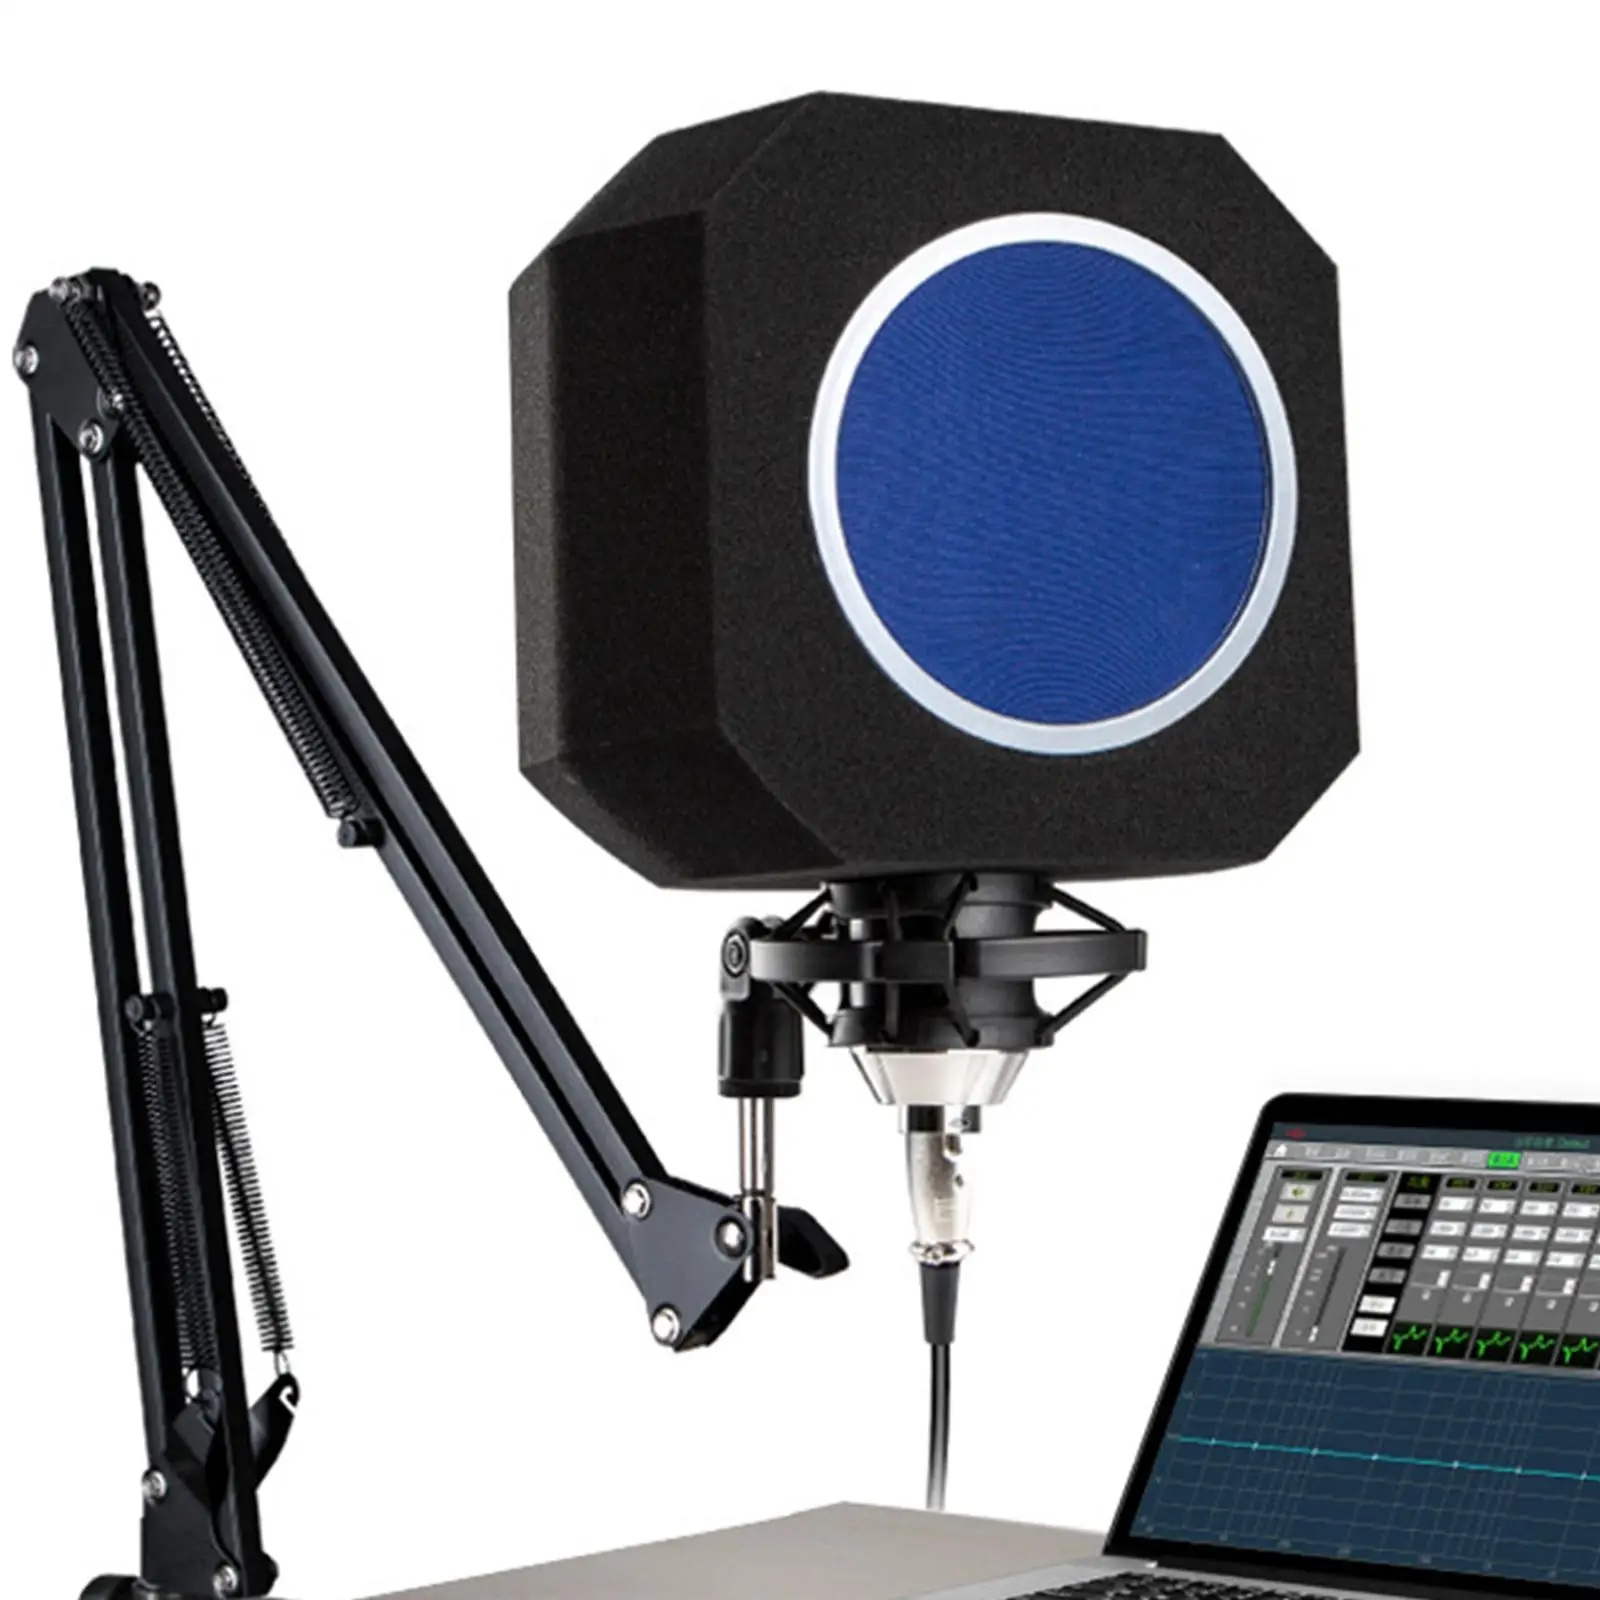 Vocal Studio Booth Studio Accessories Sound Recording Booth Microphone Isolation Shield Sound Shield Foam for Studio Recording